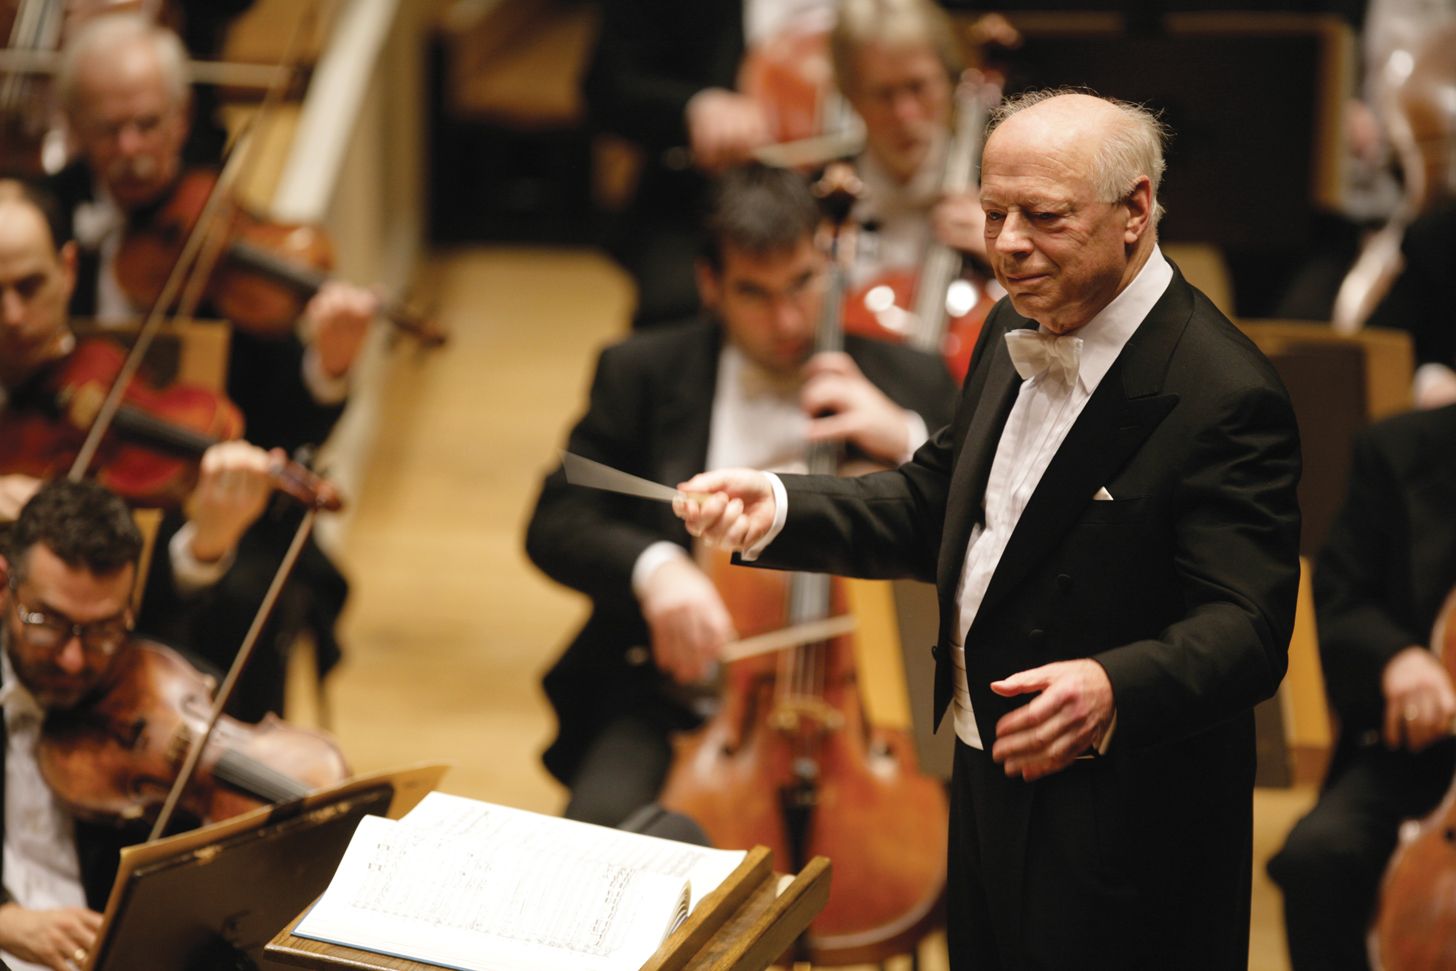 Bernard Haitink, renowned Dutch conductor, dies at 92